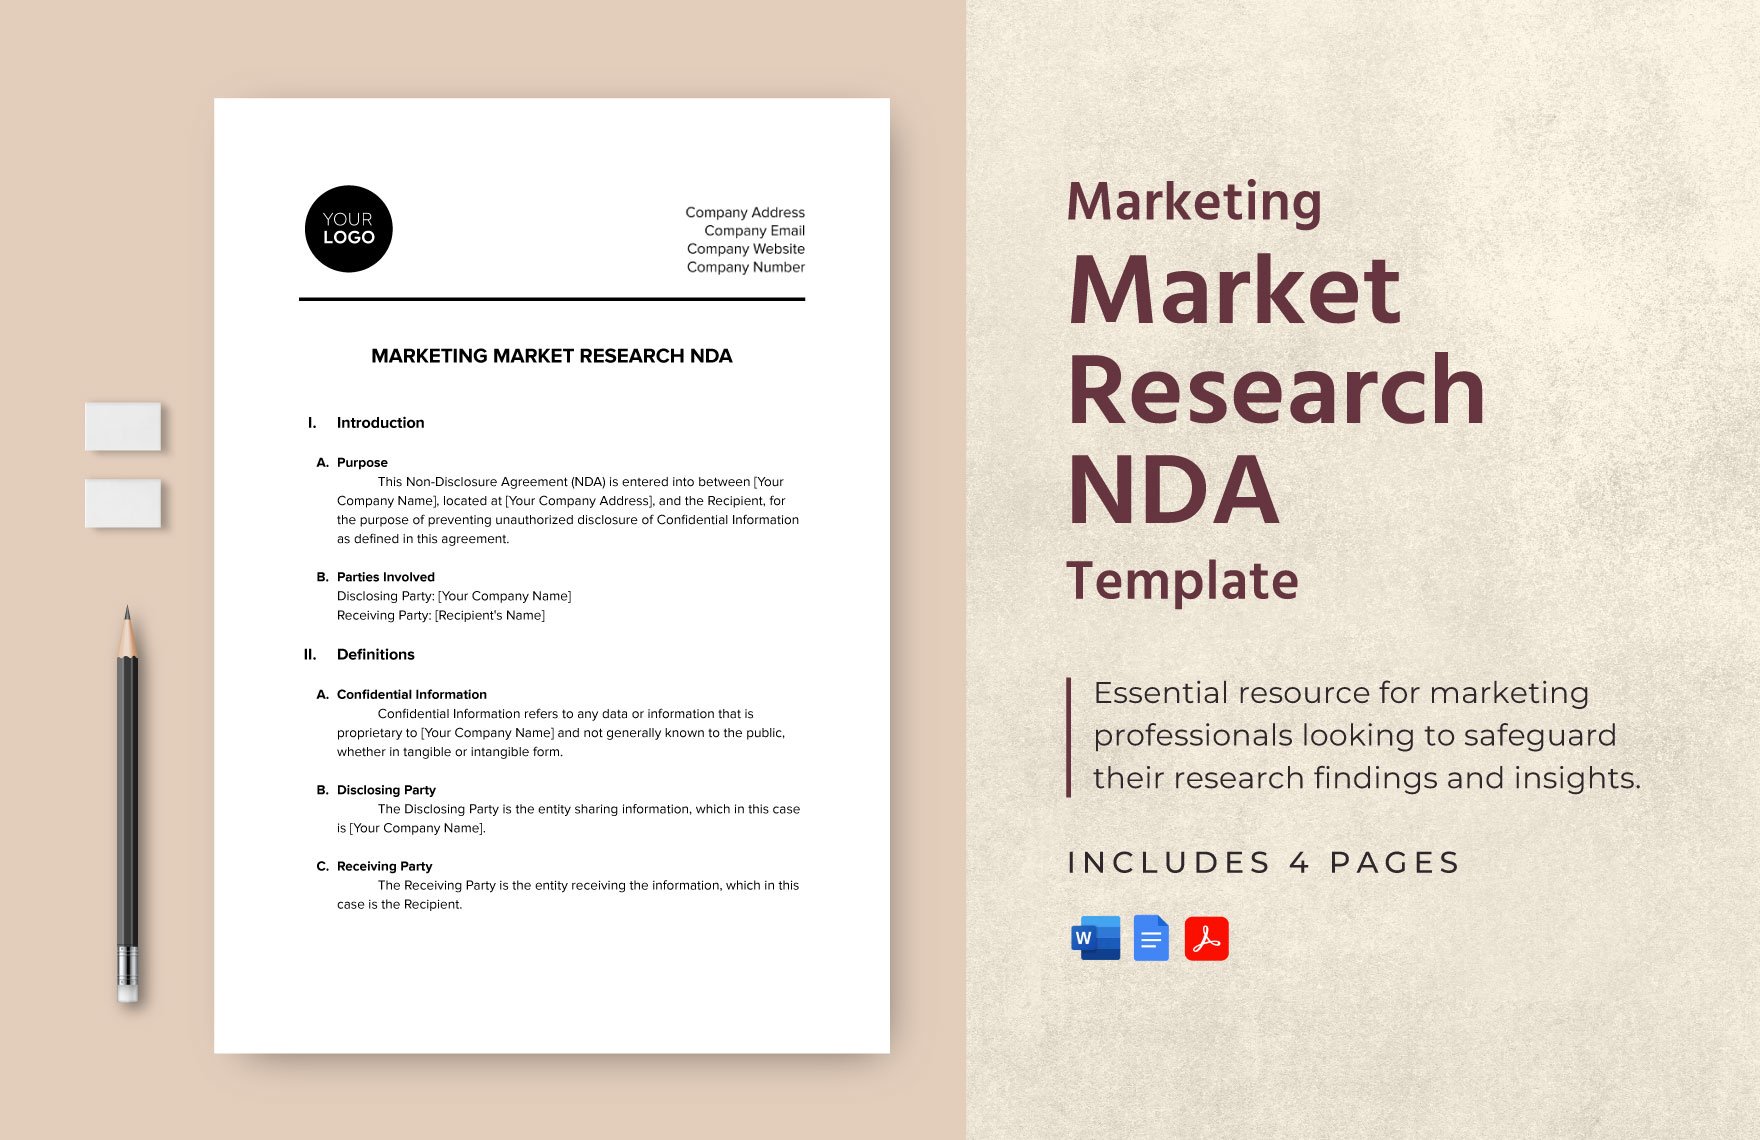 Marketing Market Research NDA Template